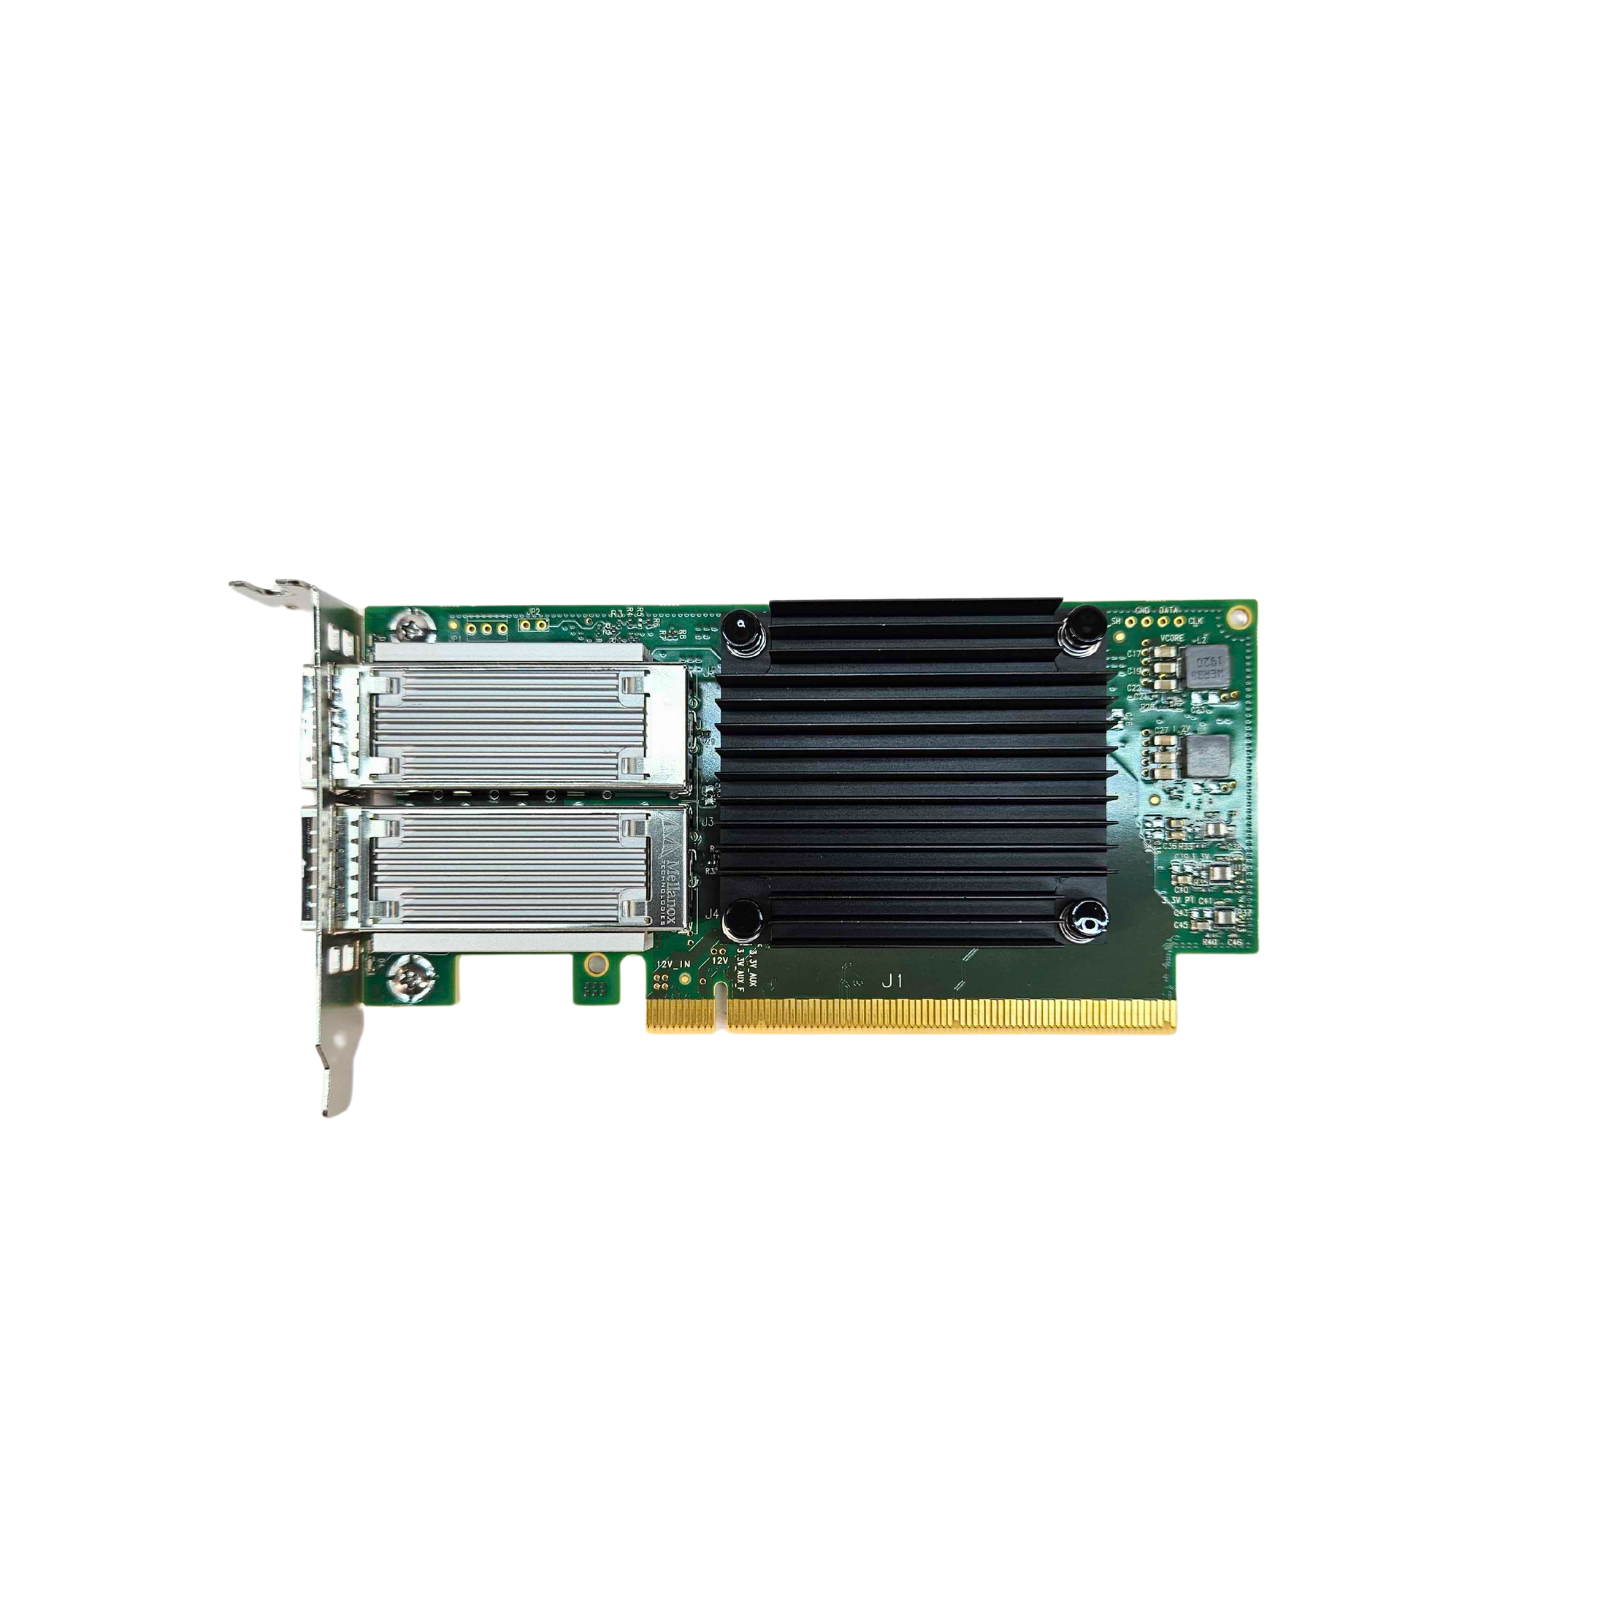 Dell Mellannox Cx516a Connectx-5 Dual Port 100 GB NIC Network Interface Card  (9FTMY)